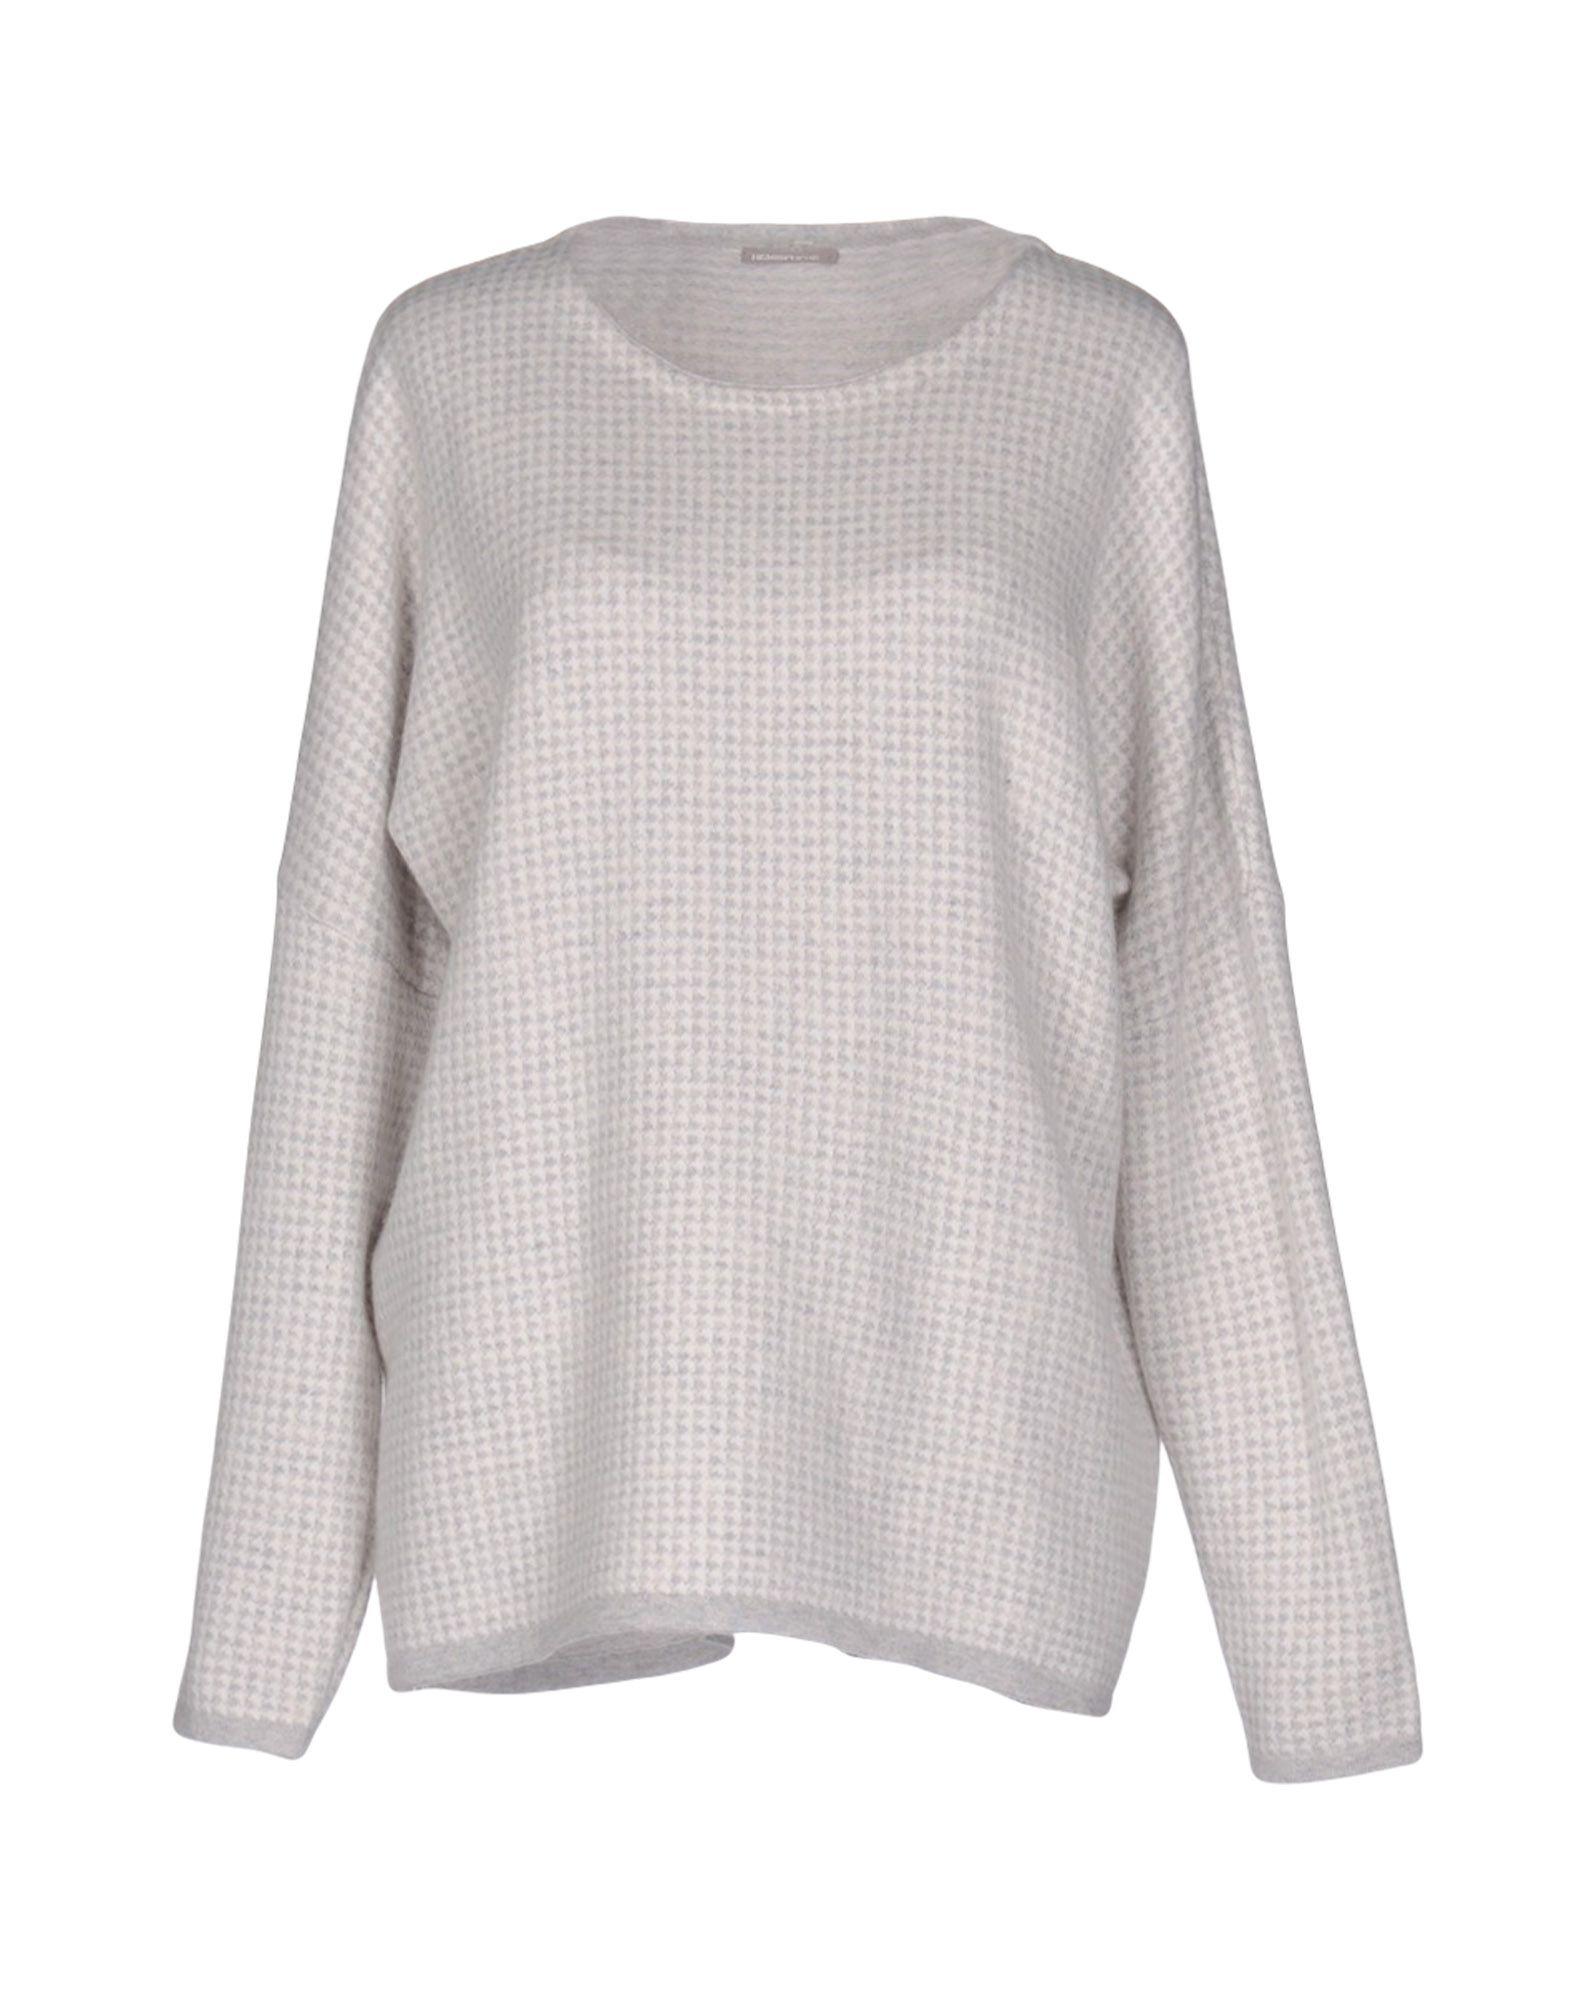 Lyst - Hemisphere Sweater in Gray